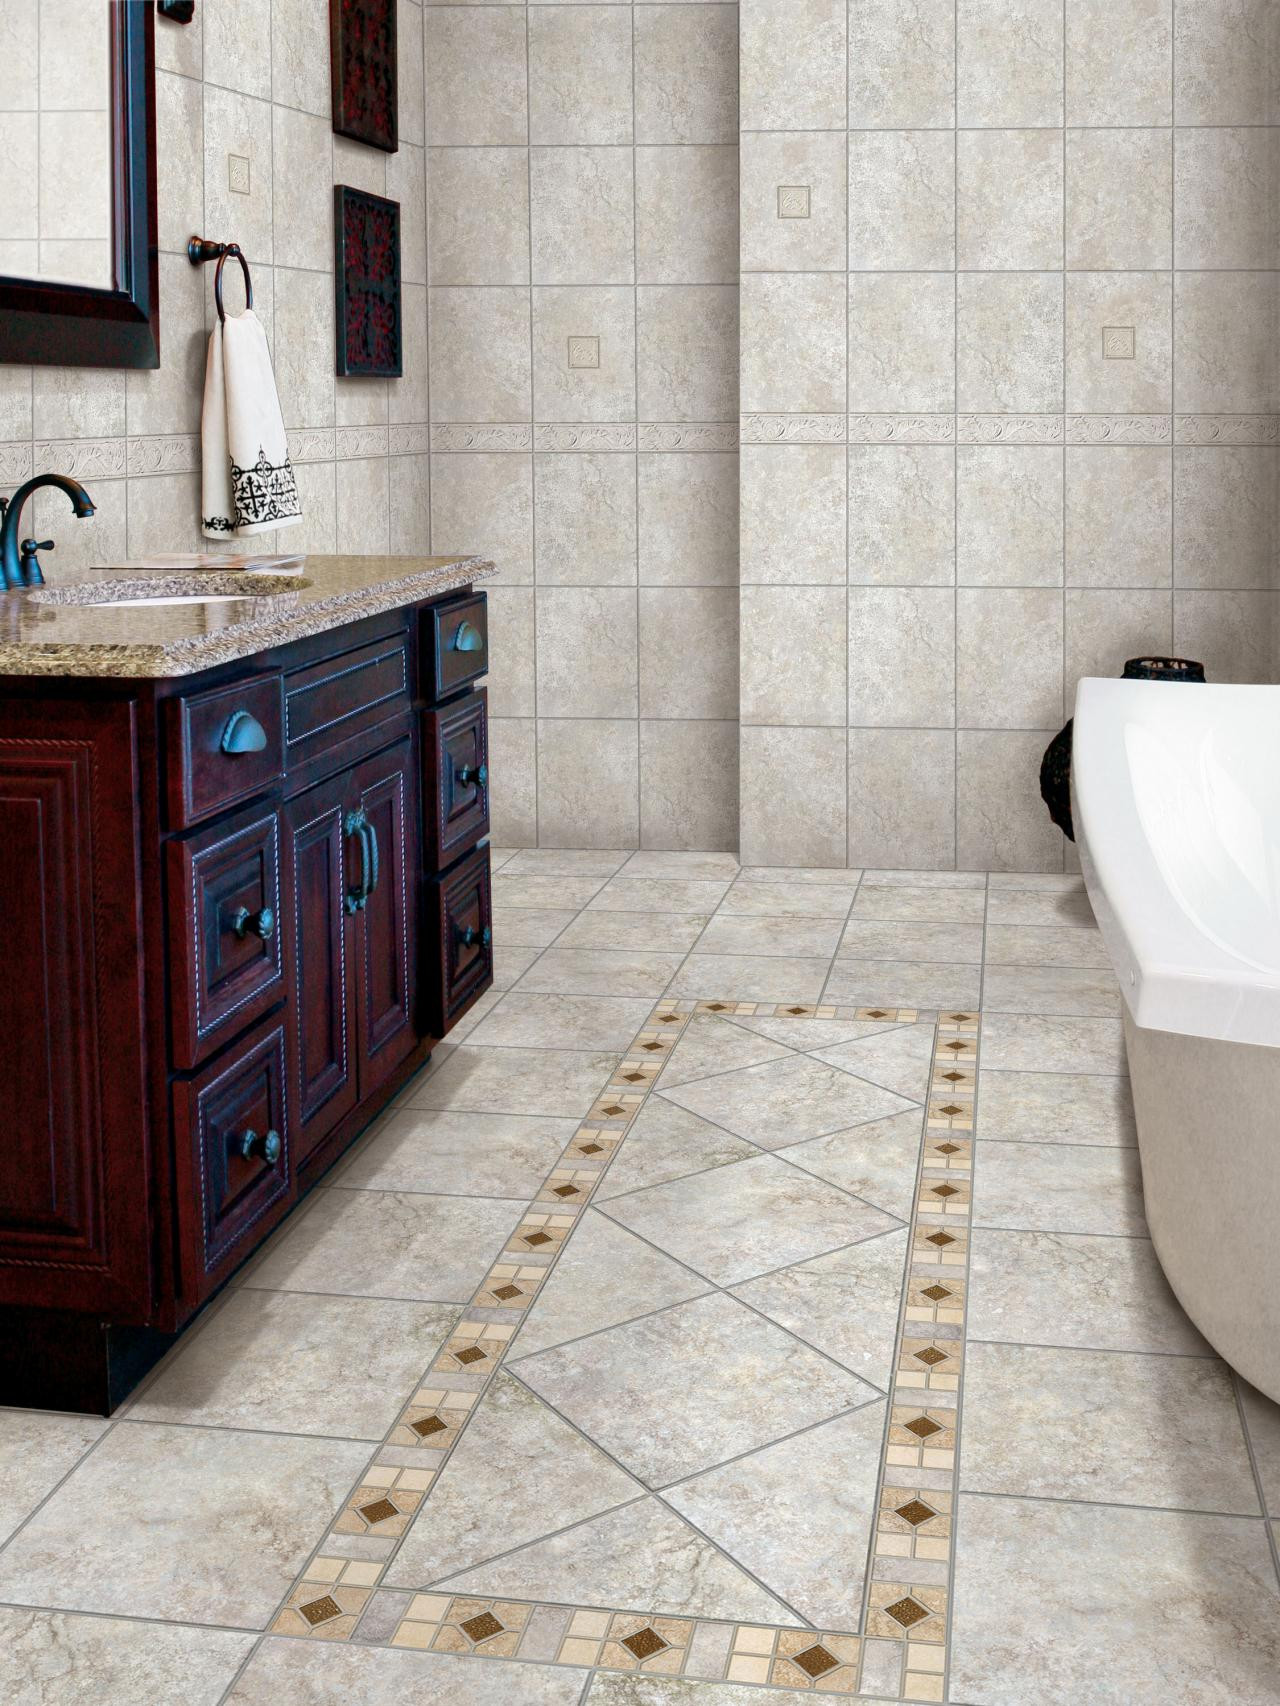 Floor Tiles For Bathrooms
 How to tiling a bathroom floor right tips Interior